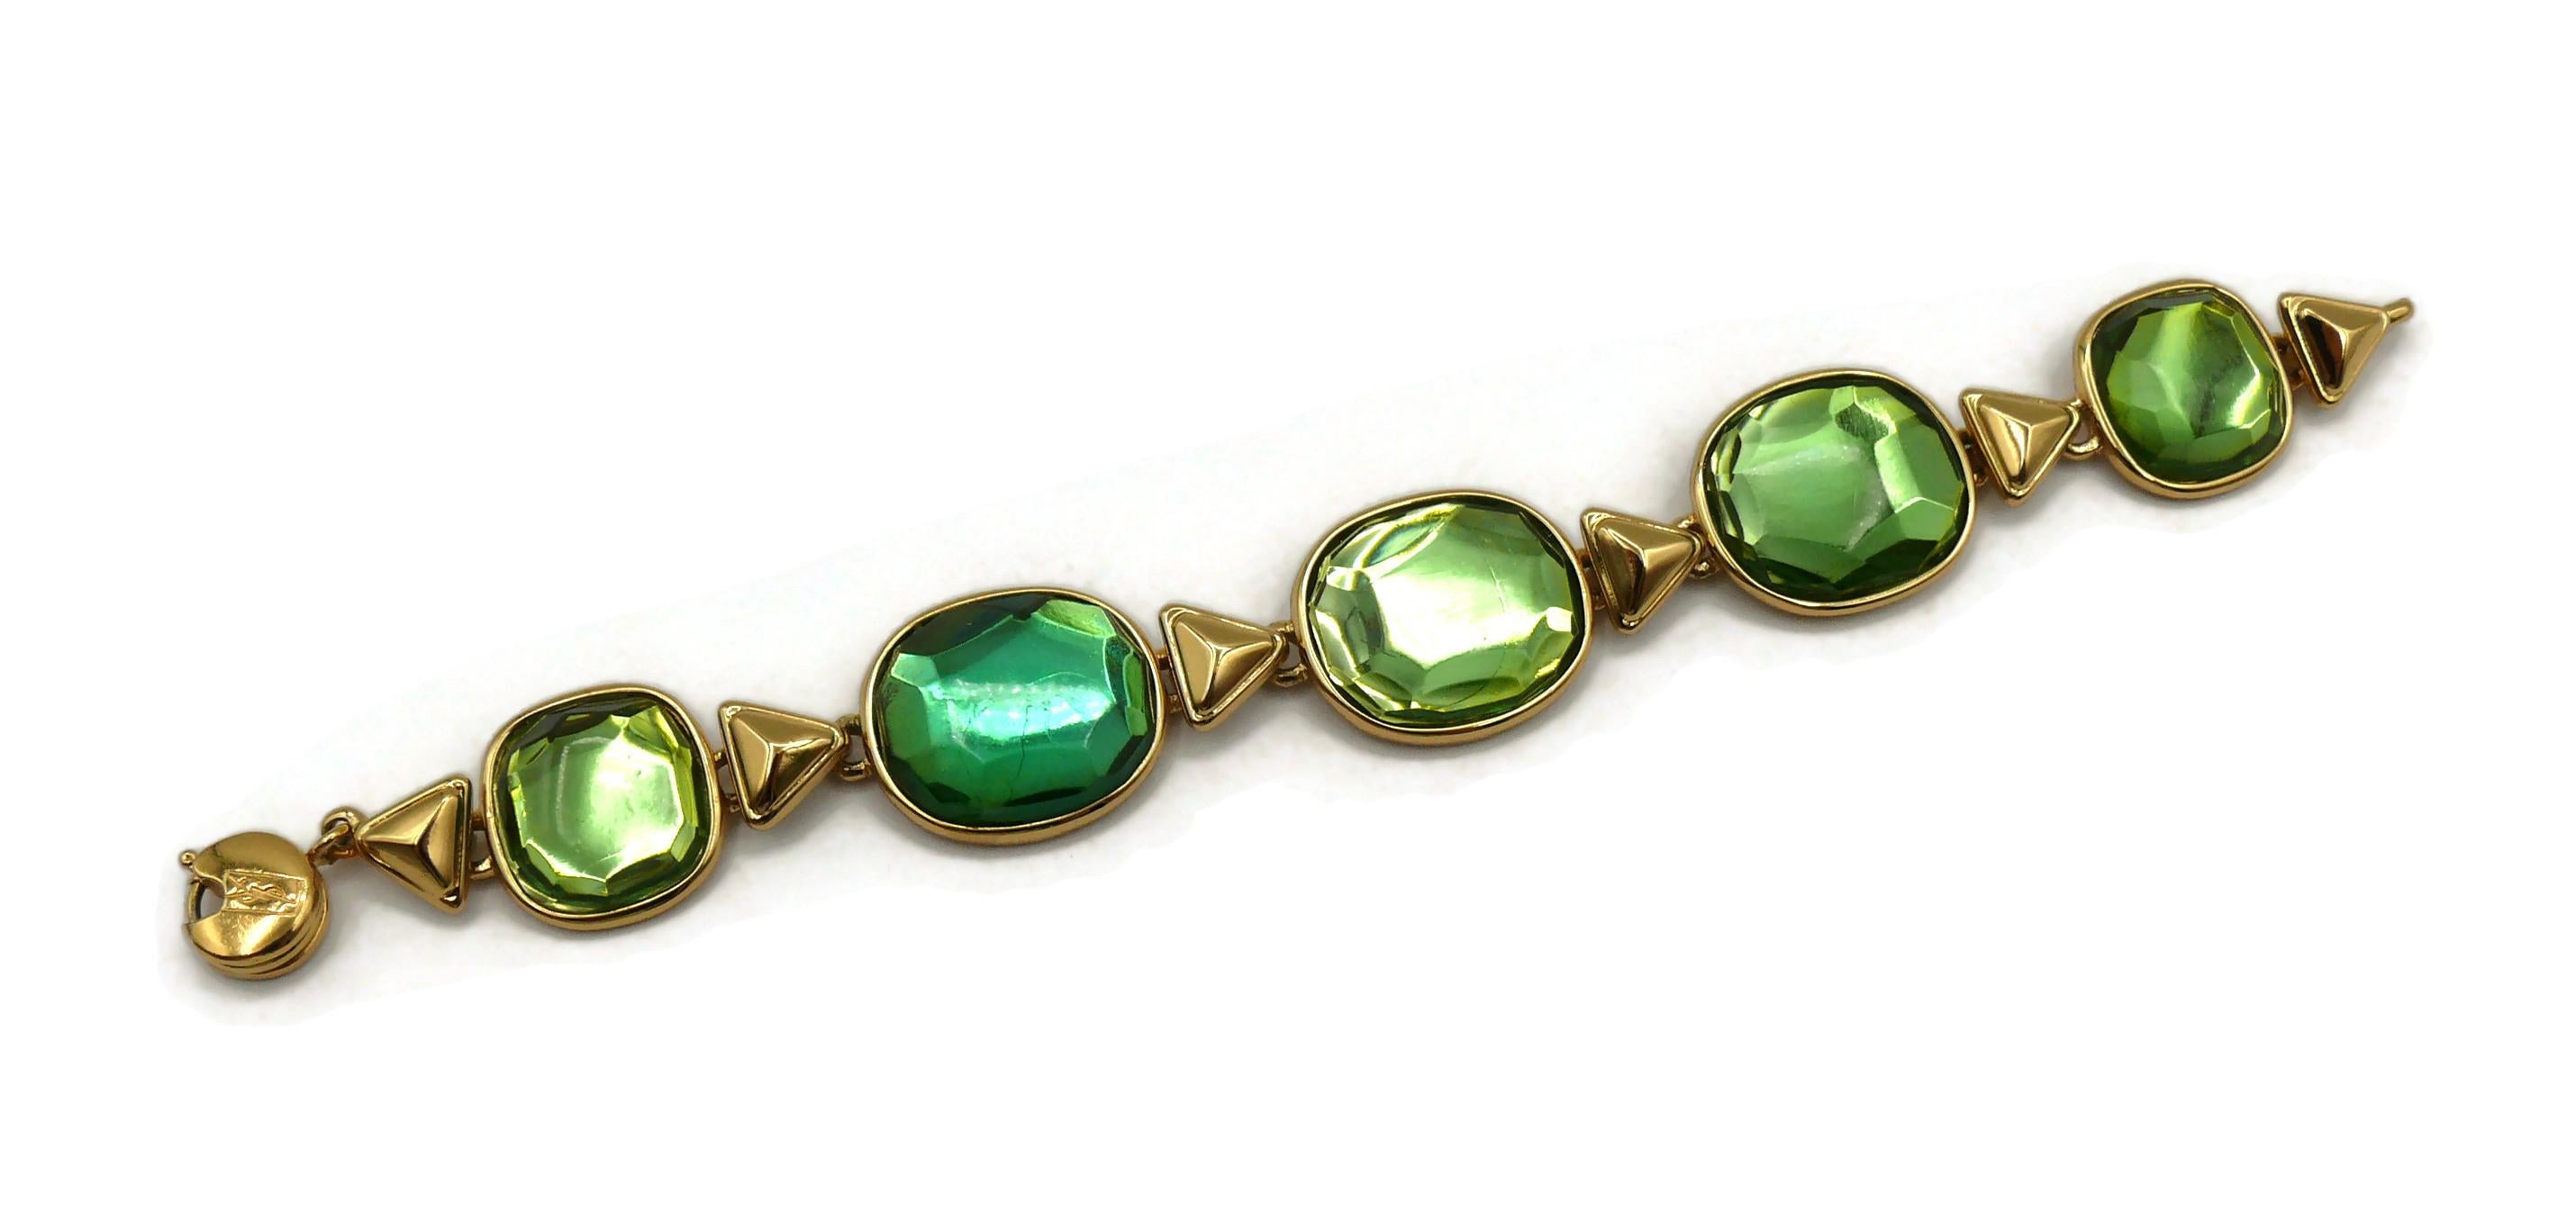 YVES SAINT LAURENT YSL Vintage Green Resin Link Bracelet In Good Condition For Sale In Nice, FR